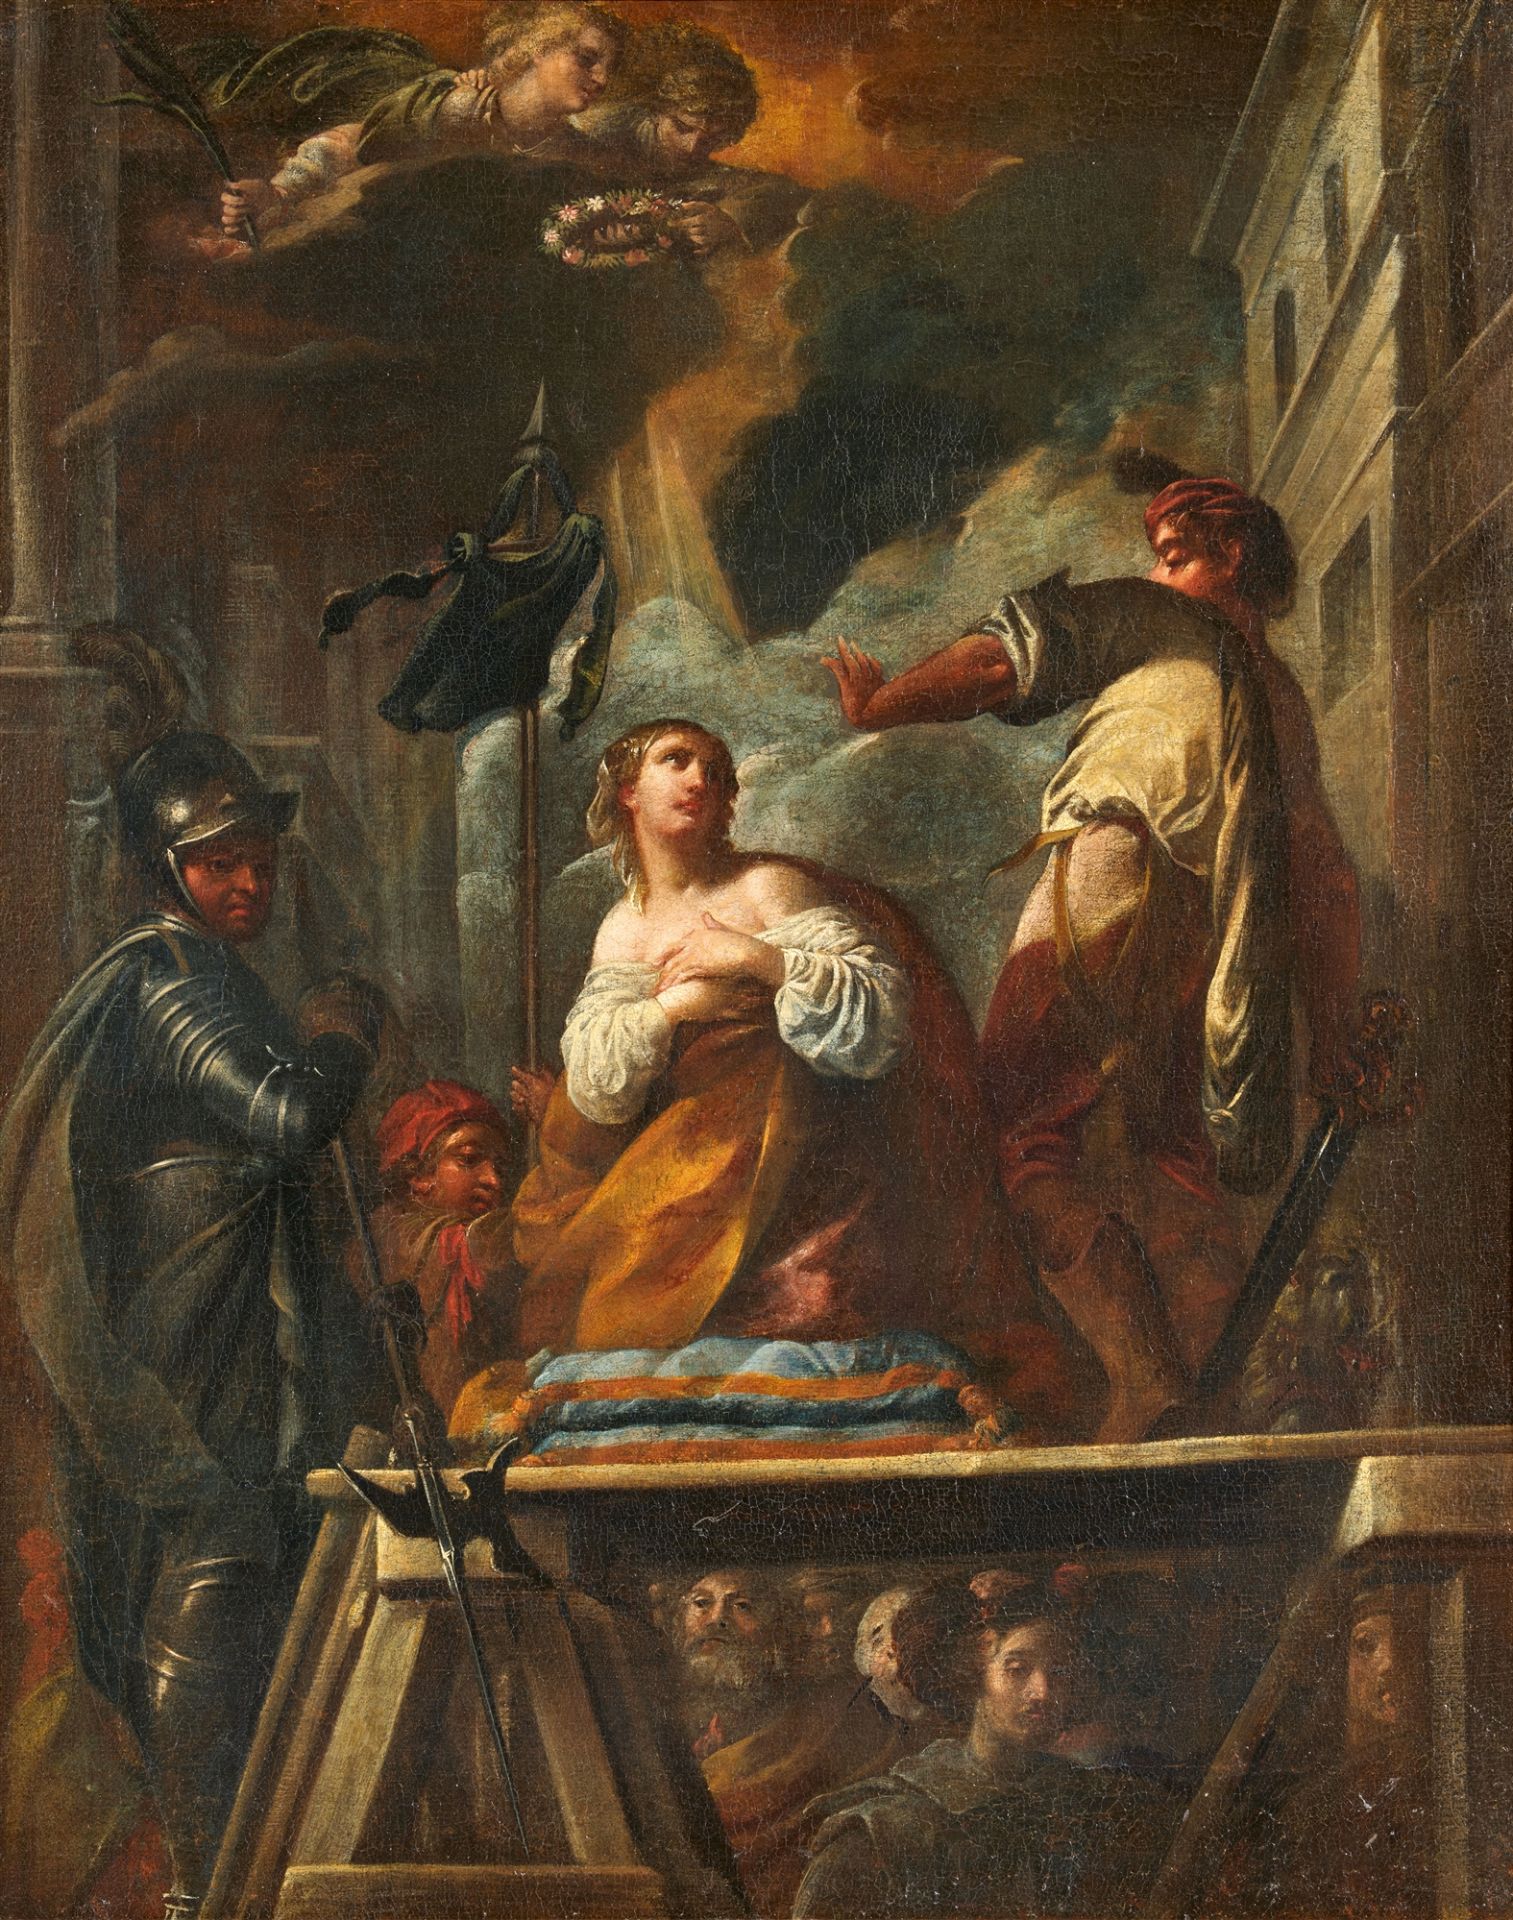 Venetian School 17th century, The Martyrdom of St. Cecilia